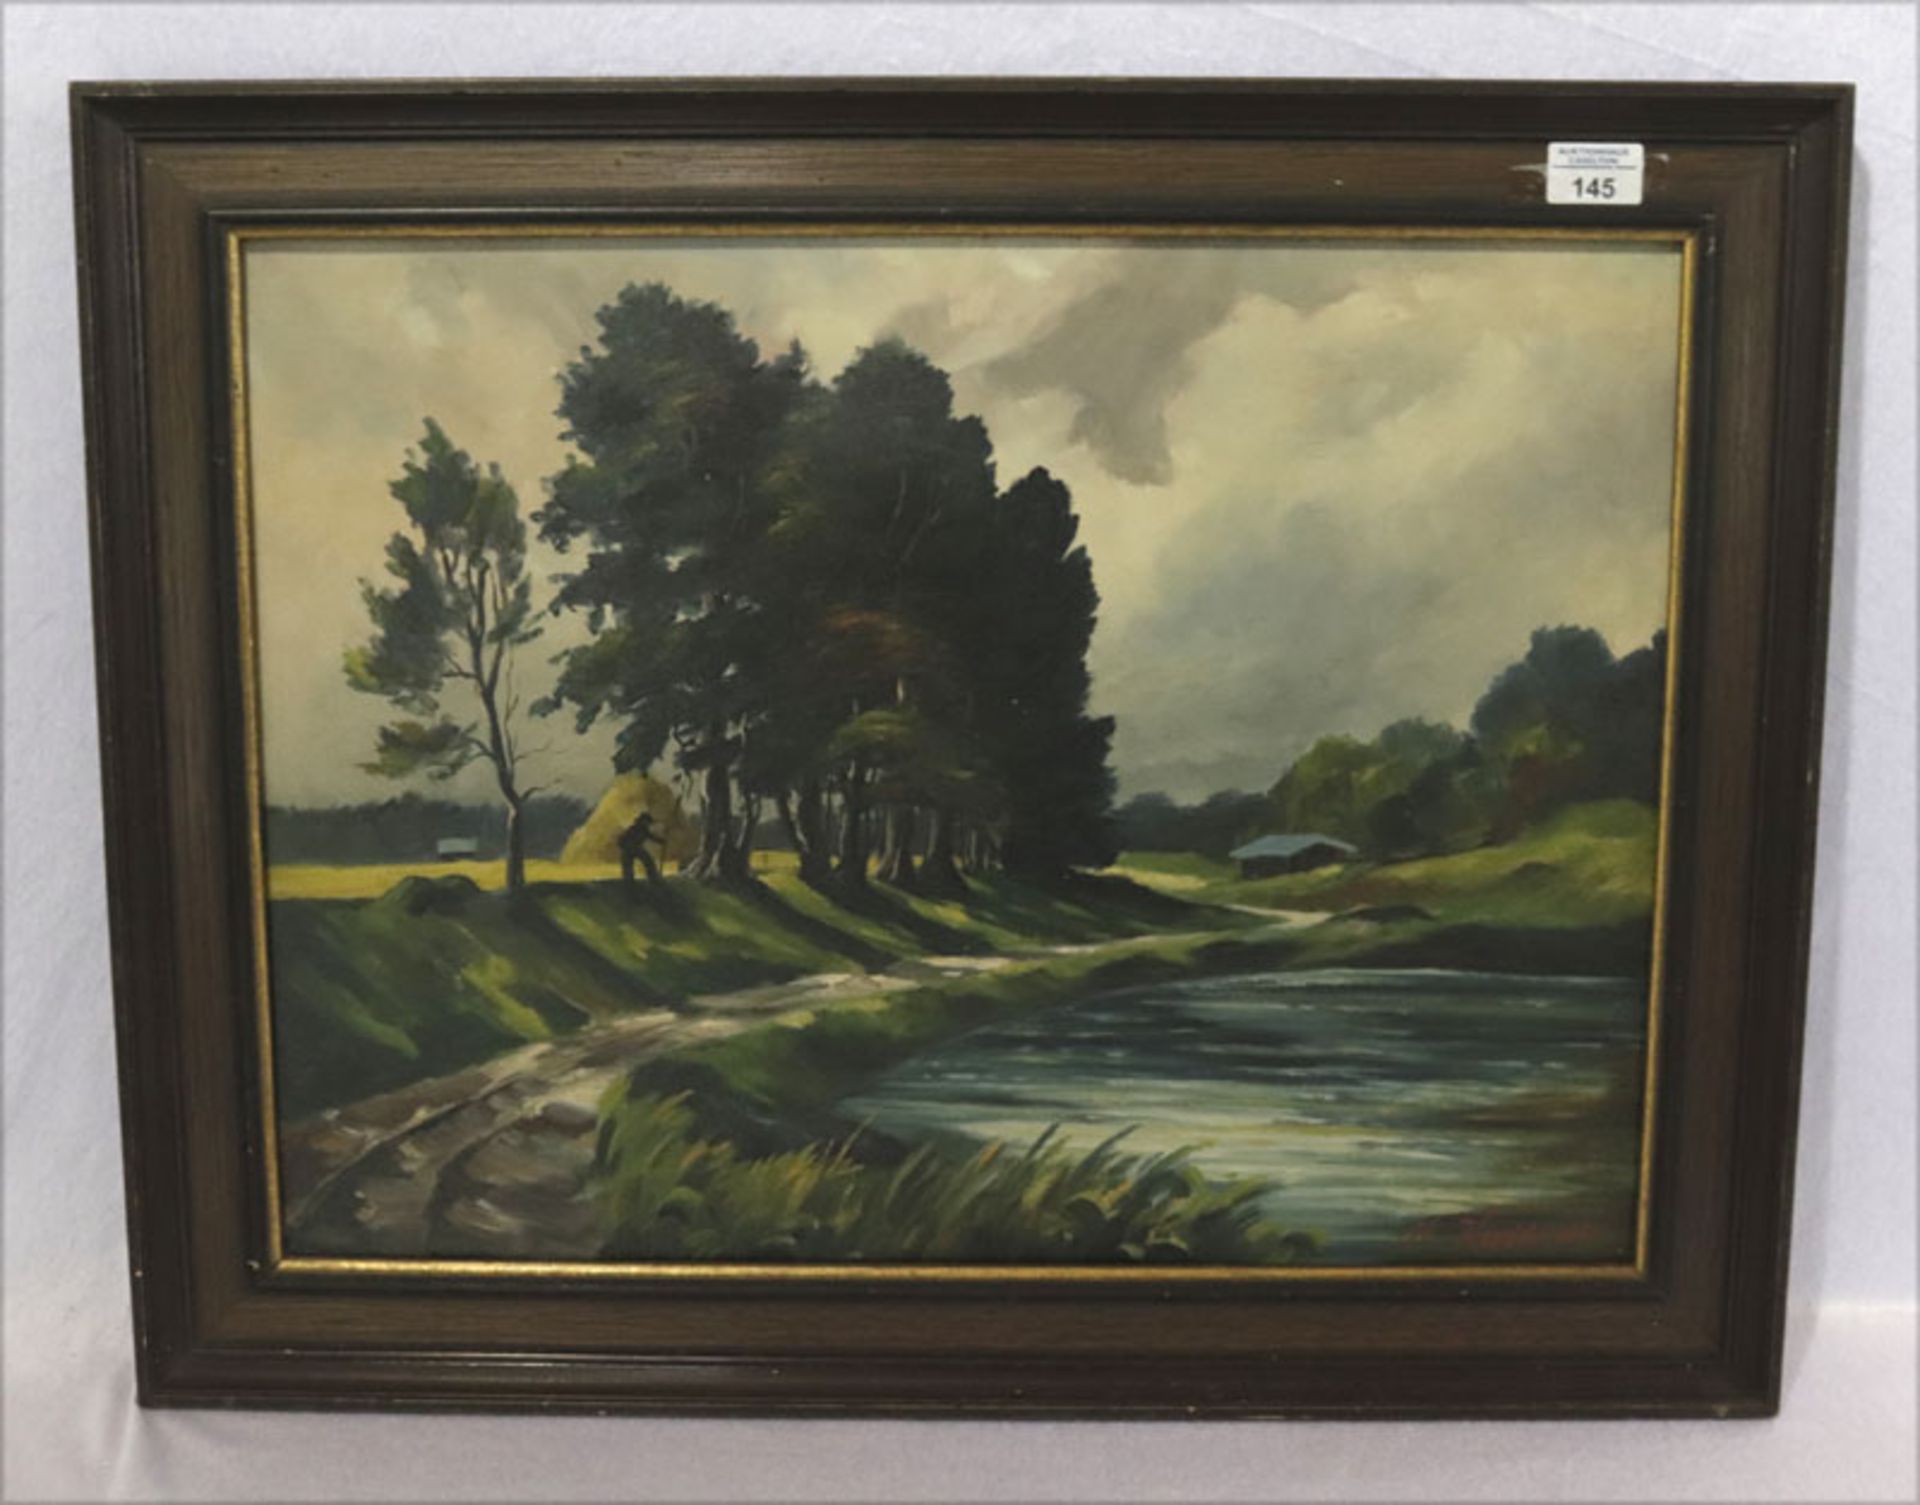 Gemälde ÖL/LW 'Landschafts-Szenerie mit Weiher', signiert H. Kwitt, datiert 1954, gerahmt, Rahmen